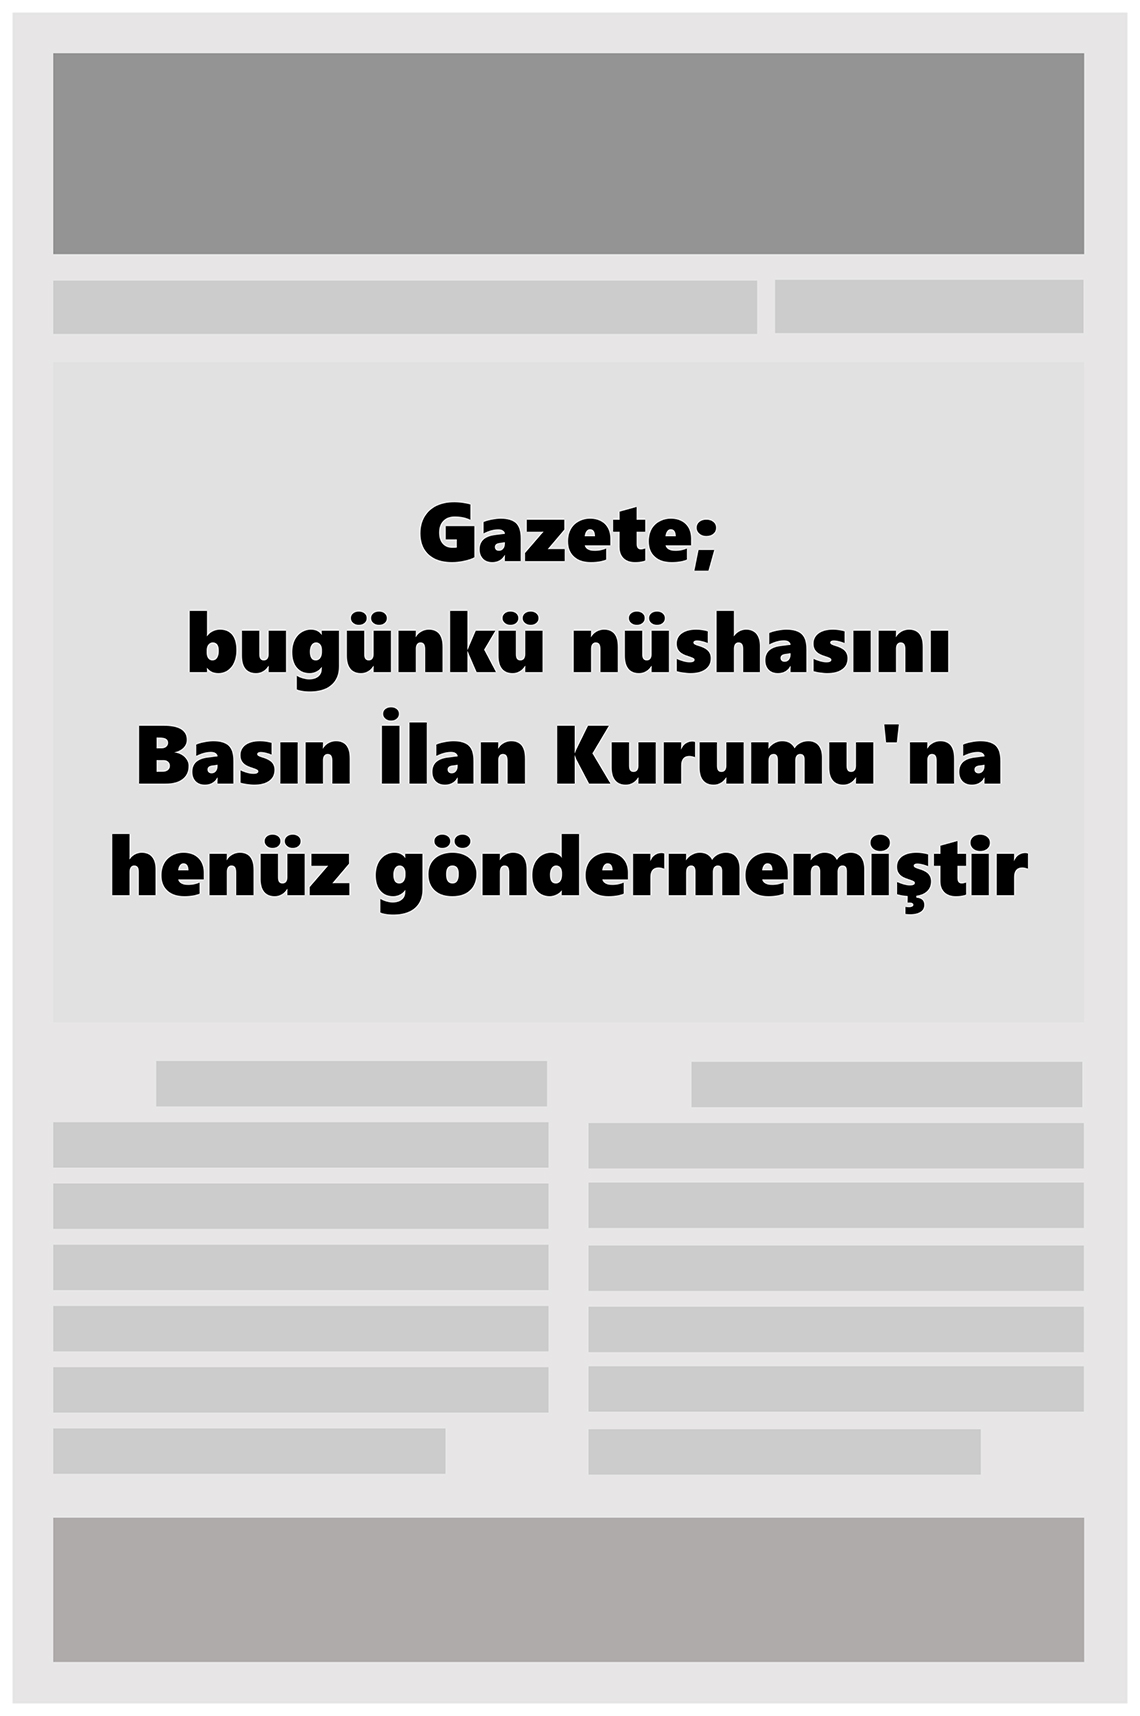 16 Ocak 2022 Gazete 3 Gazete Manşeti